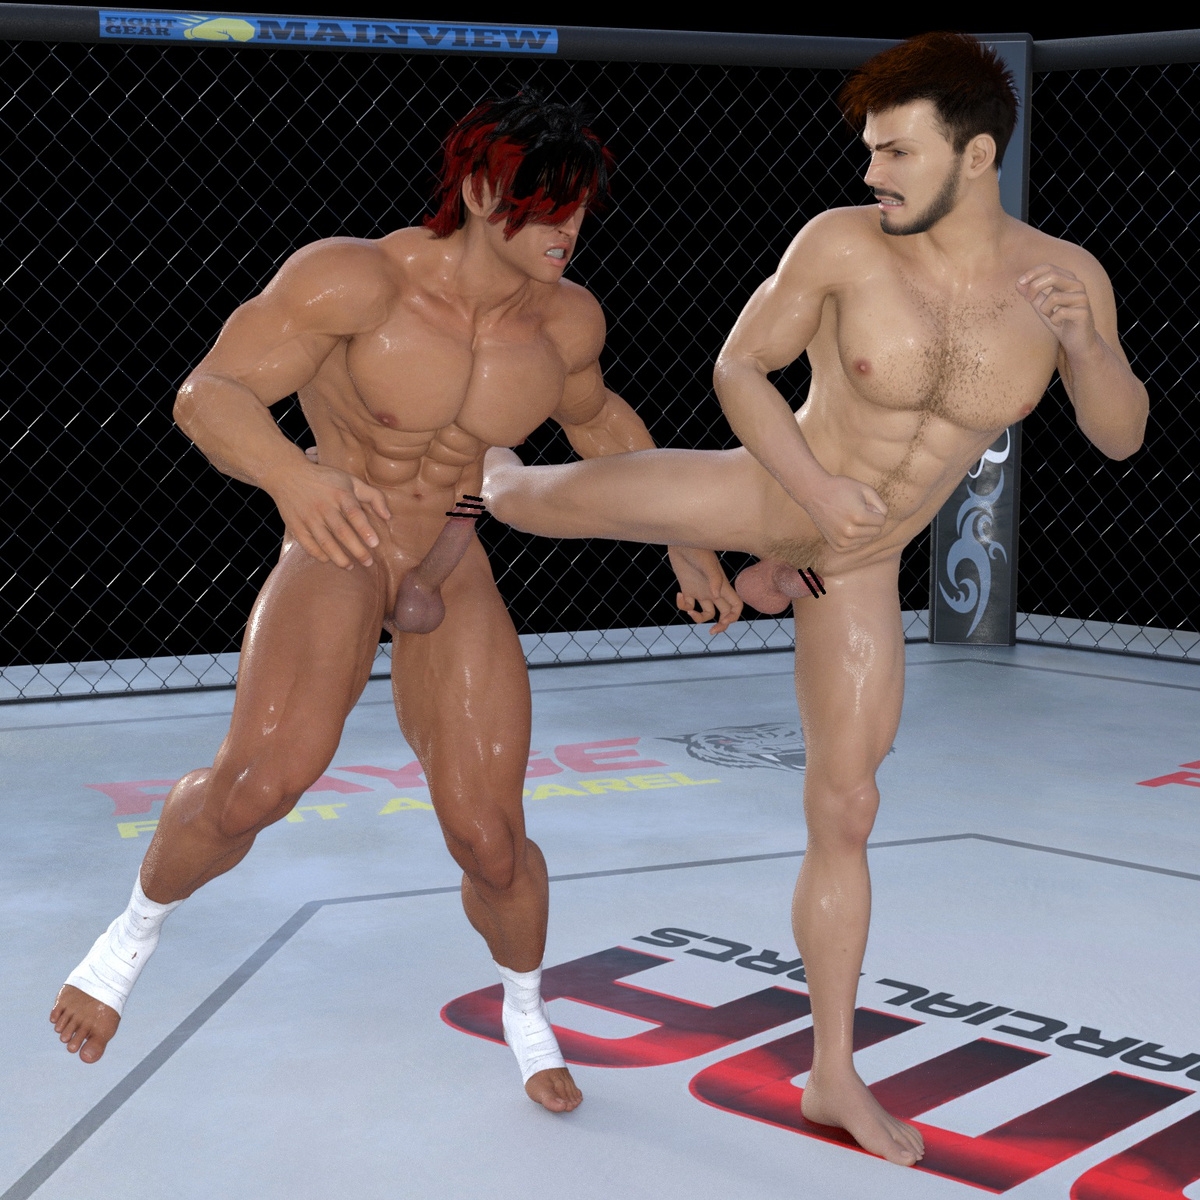 (WinterH) wrestling 3D Art 126